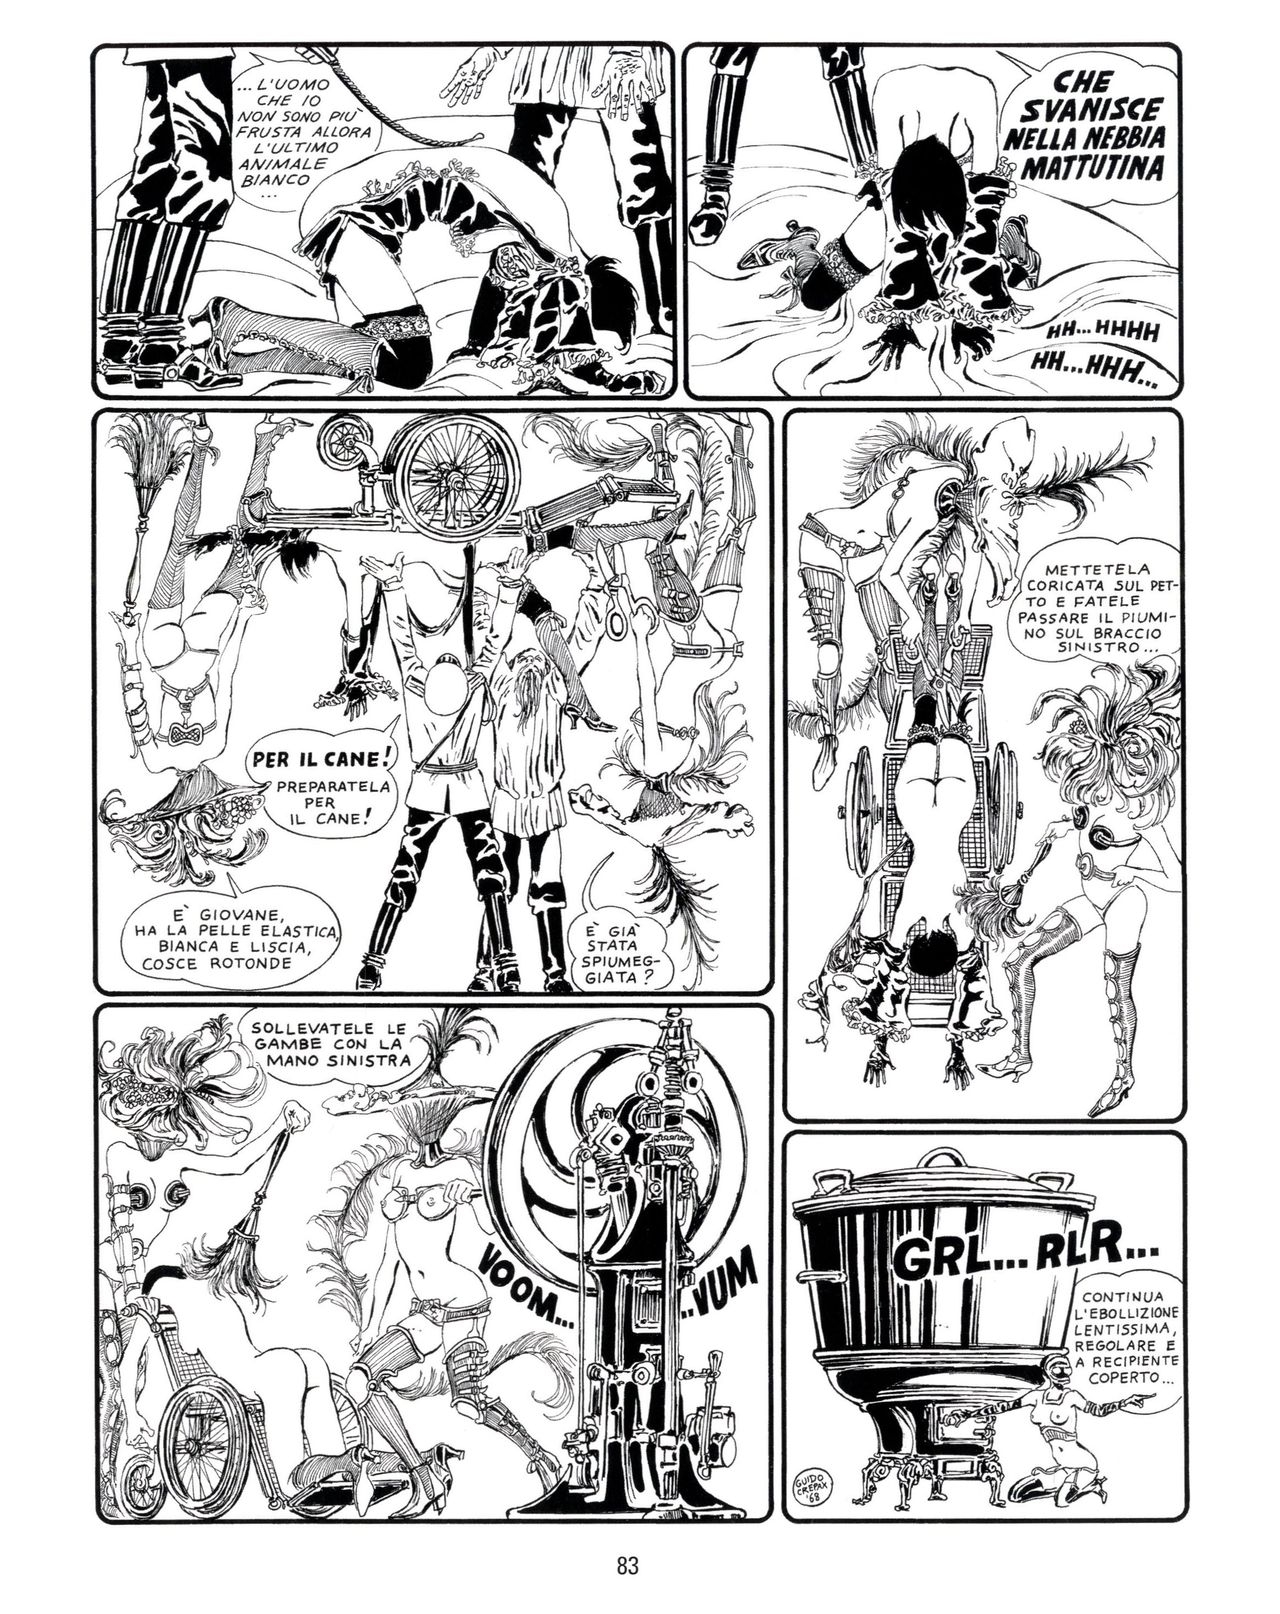 [Guido Crepax] Erotica Fumetti #25 : L'ascesa dei sotterranei : I cavalieri ciechi [Italian] 84